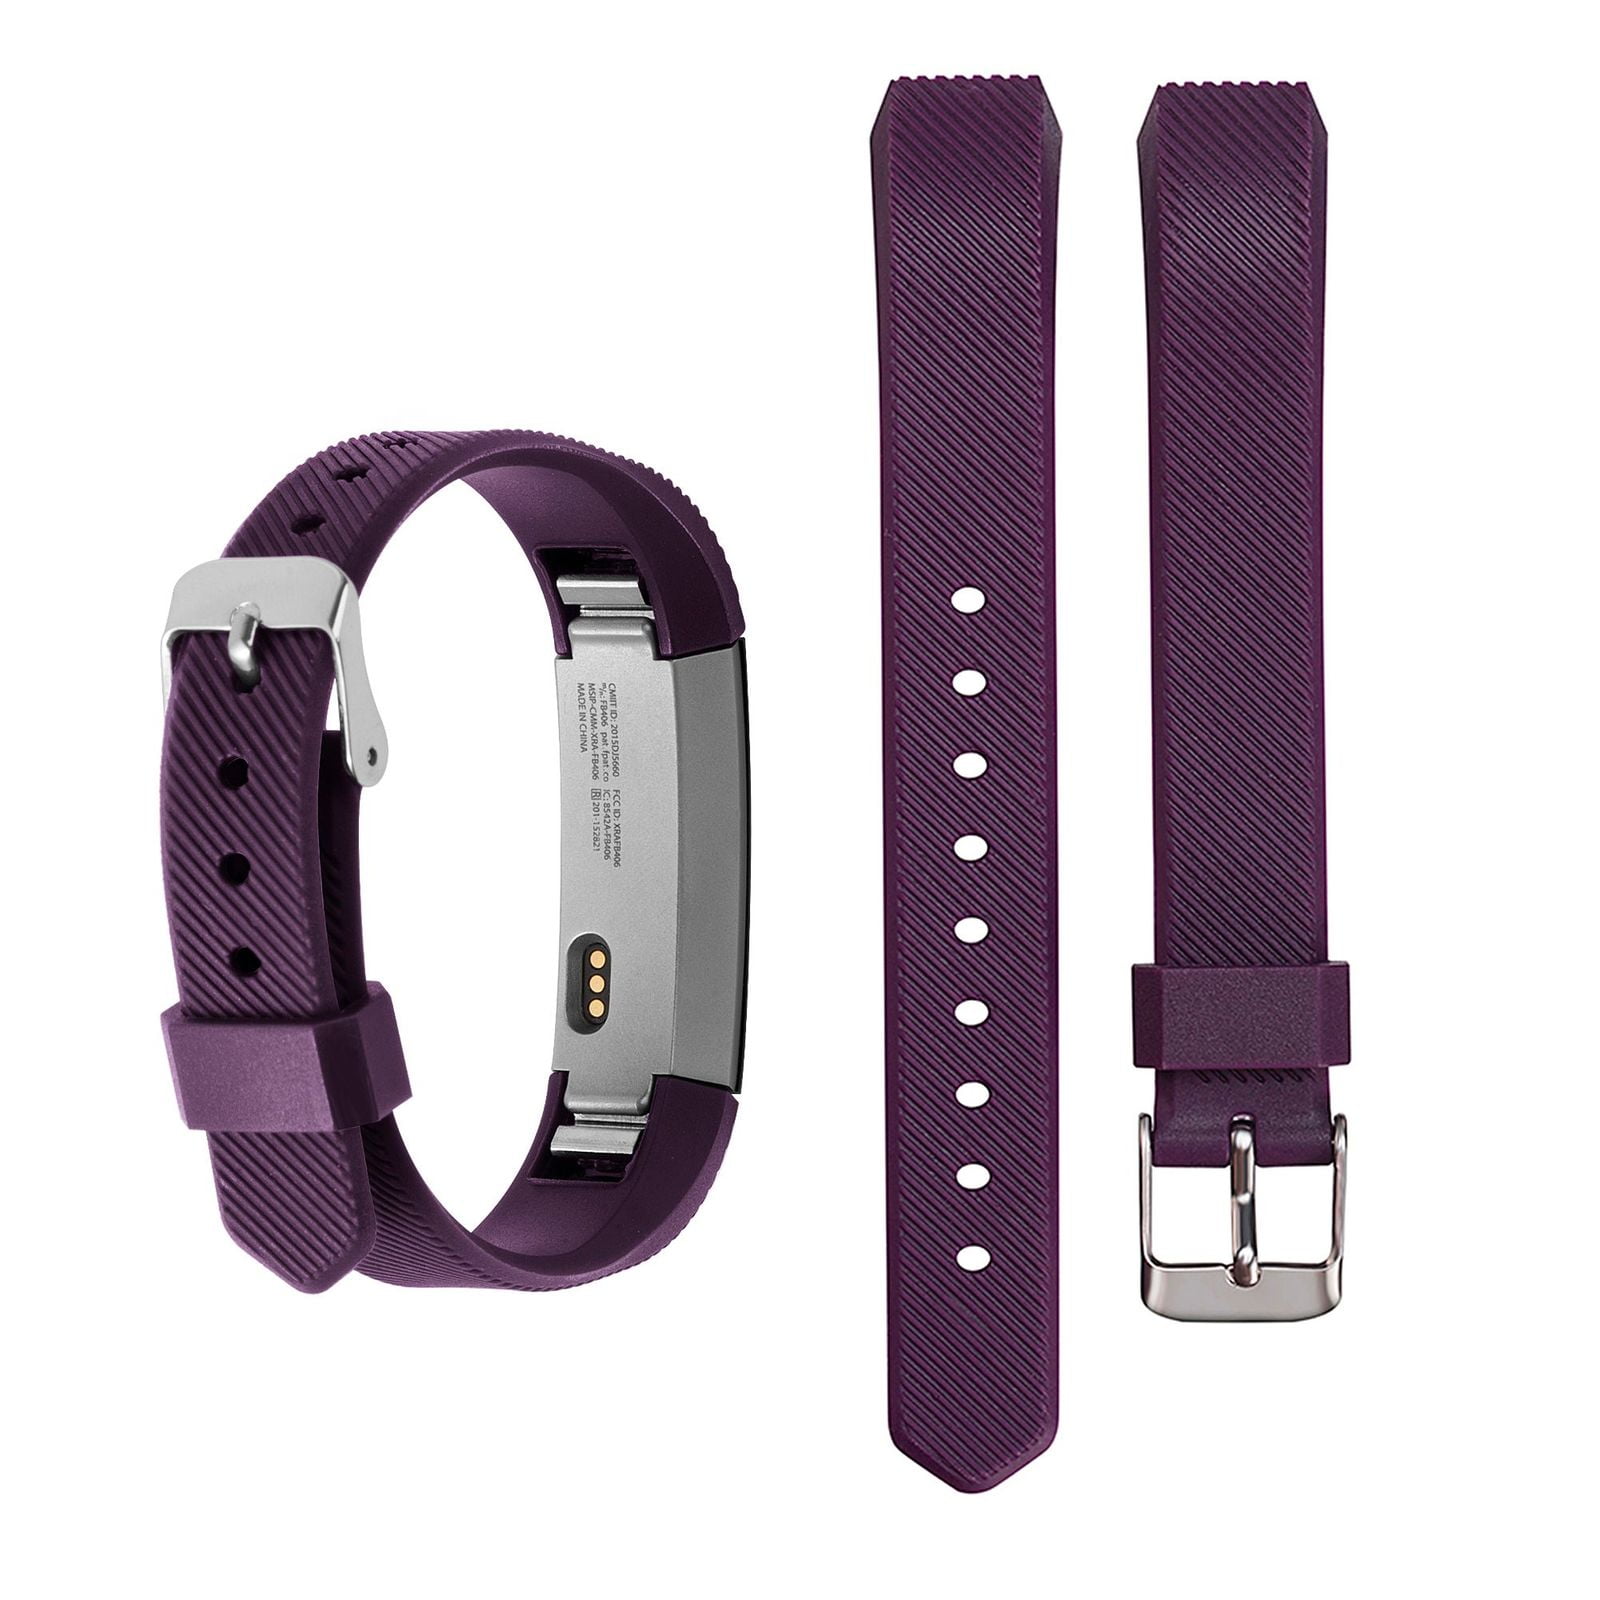 Fitbit Alta Fitness Wristband Activity Tracker Black Blue Plum Teal Pink FB406 